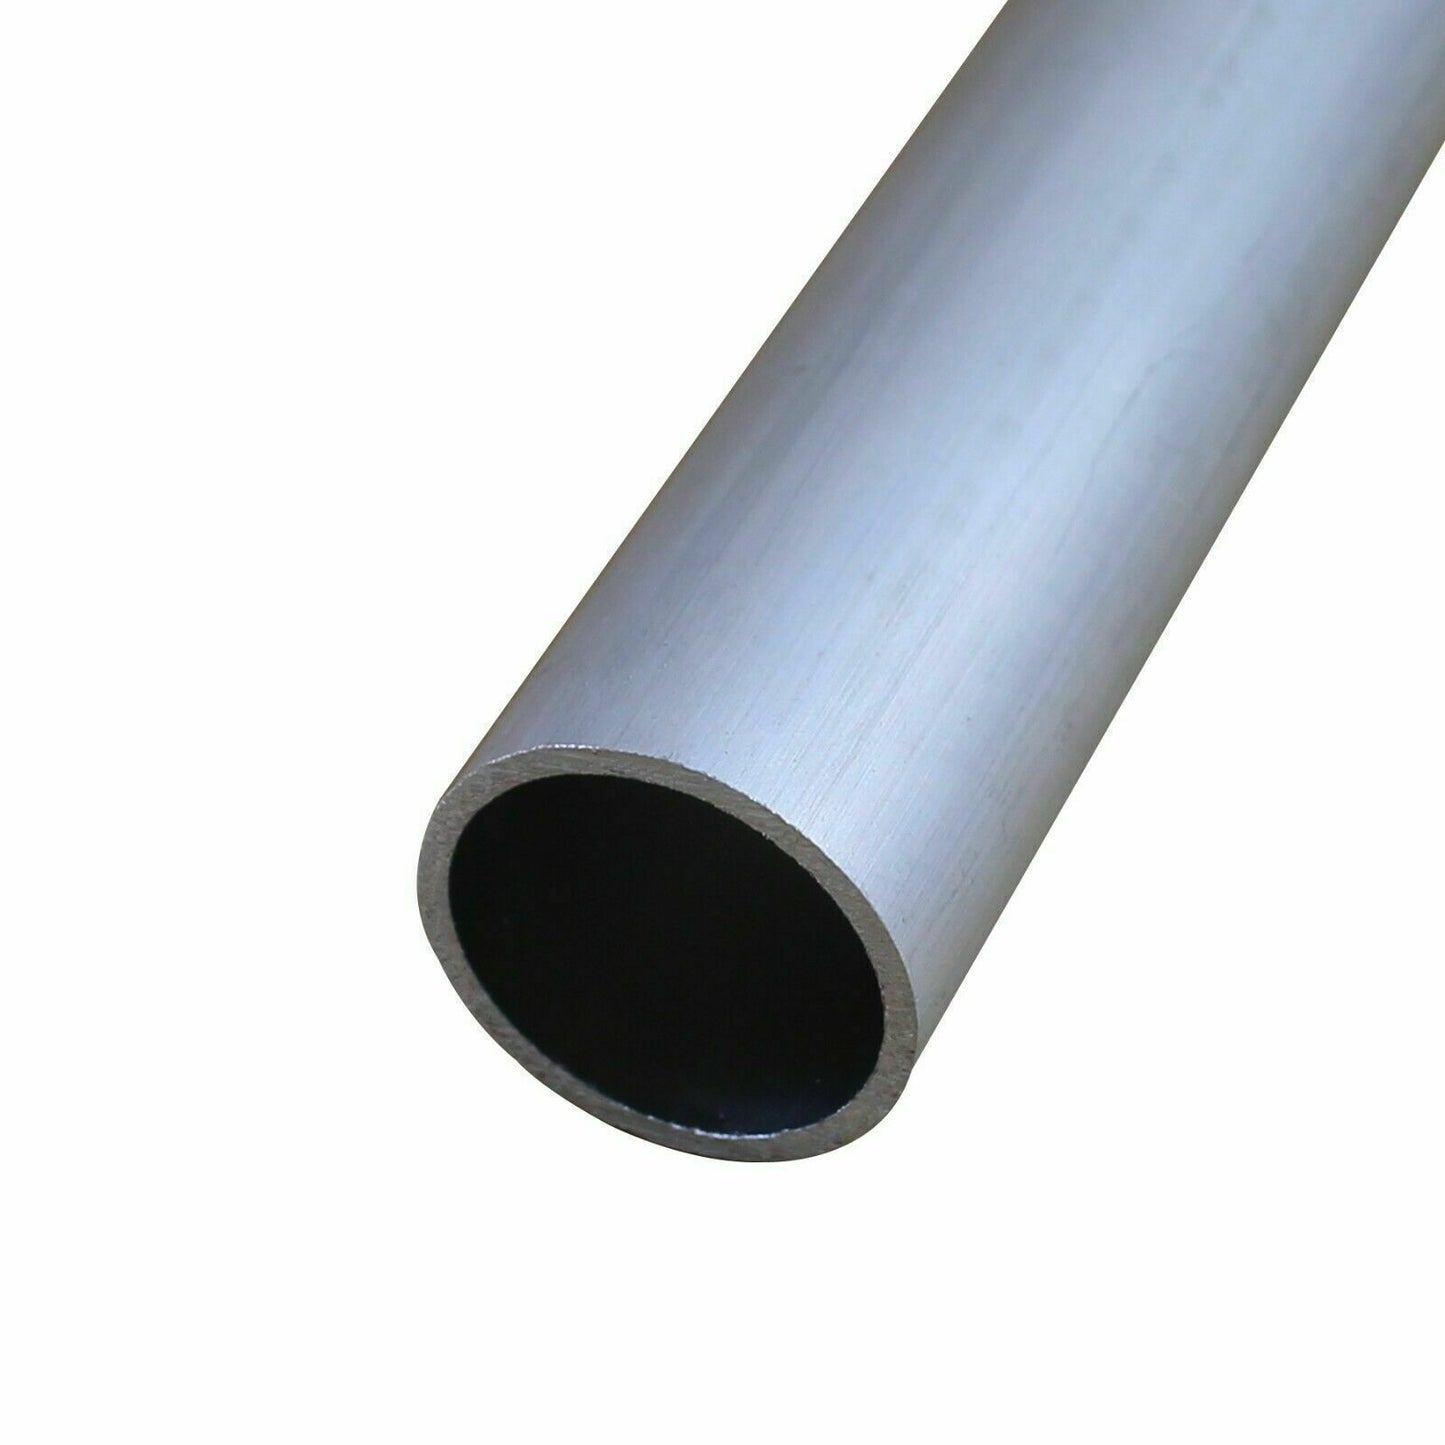 OD 36 mm ID 30 mm 1 Pcs Aluminum Round Tube Pipe